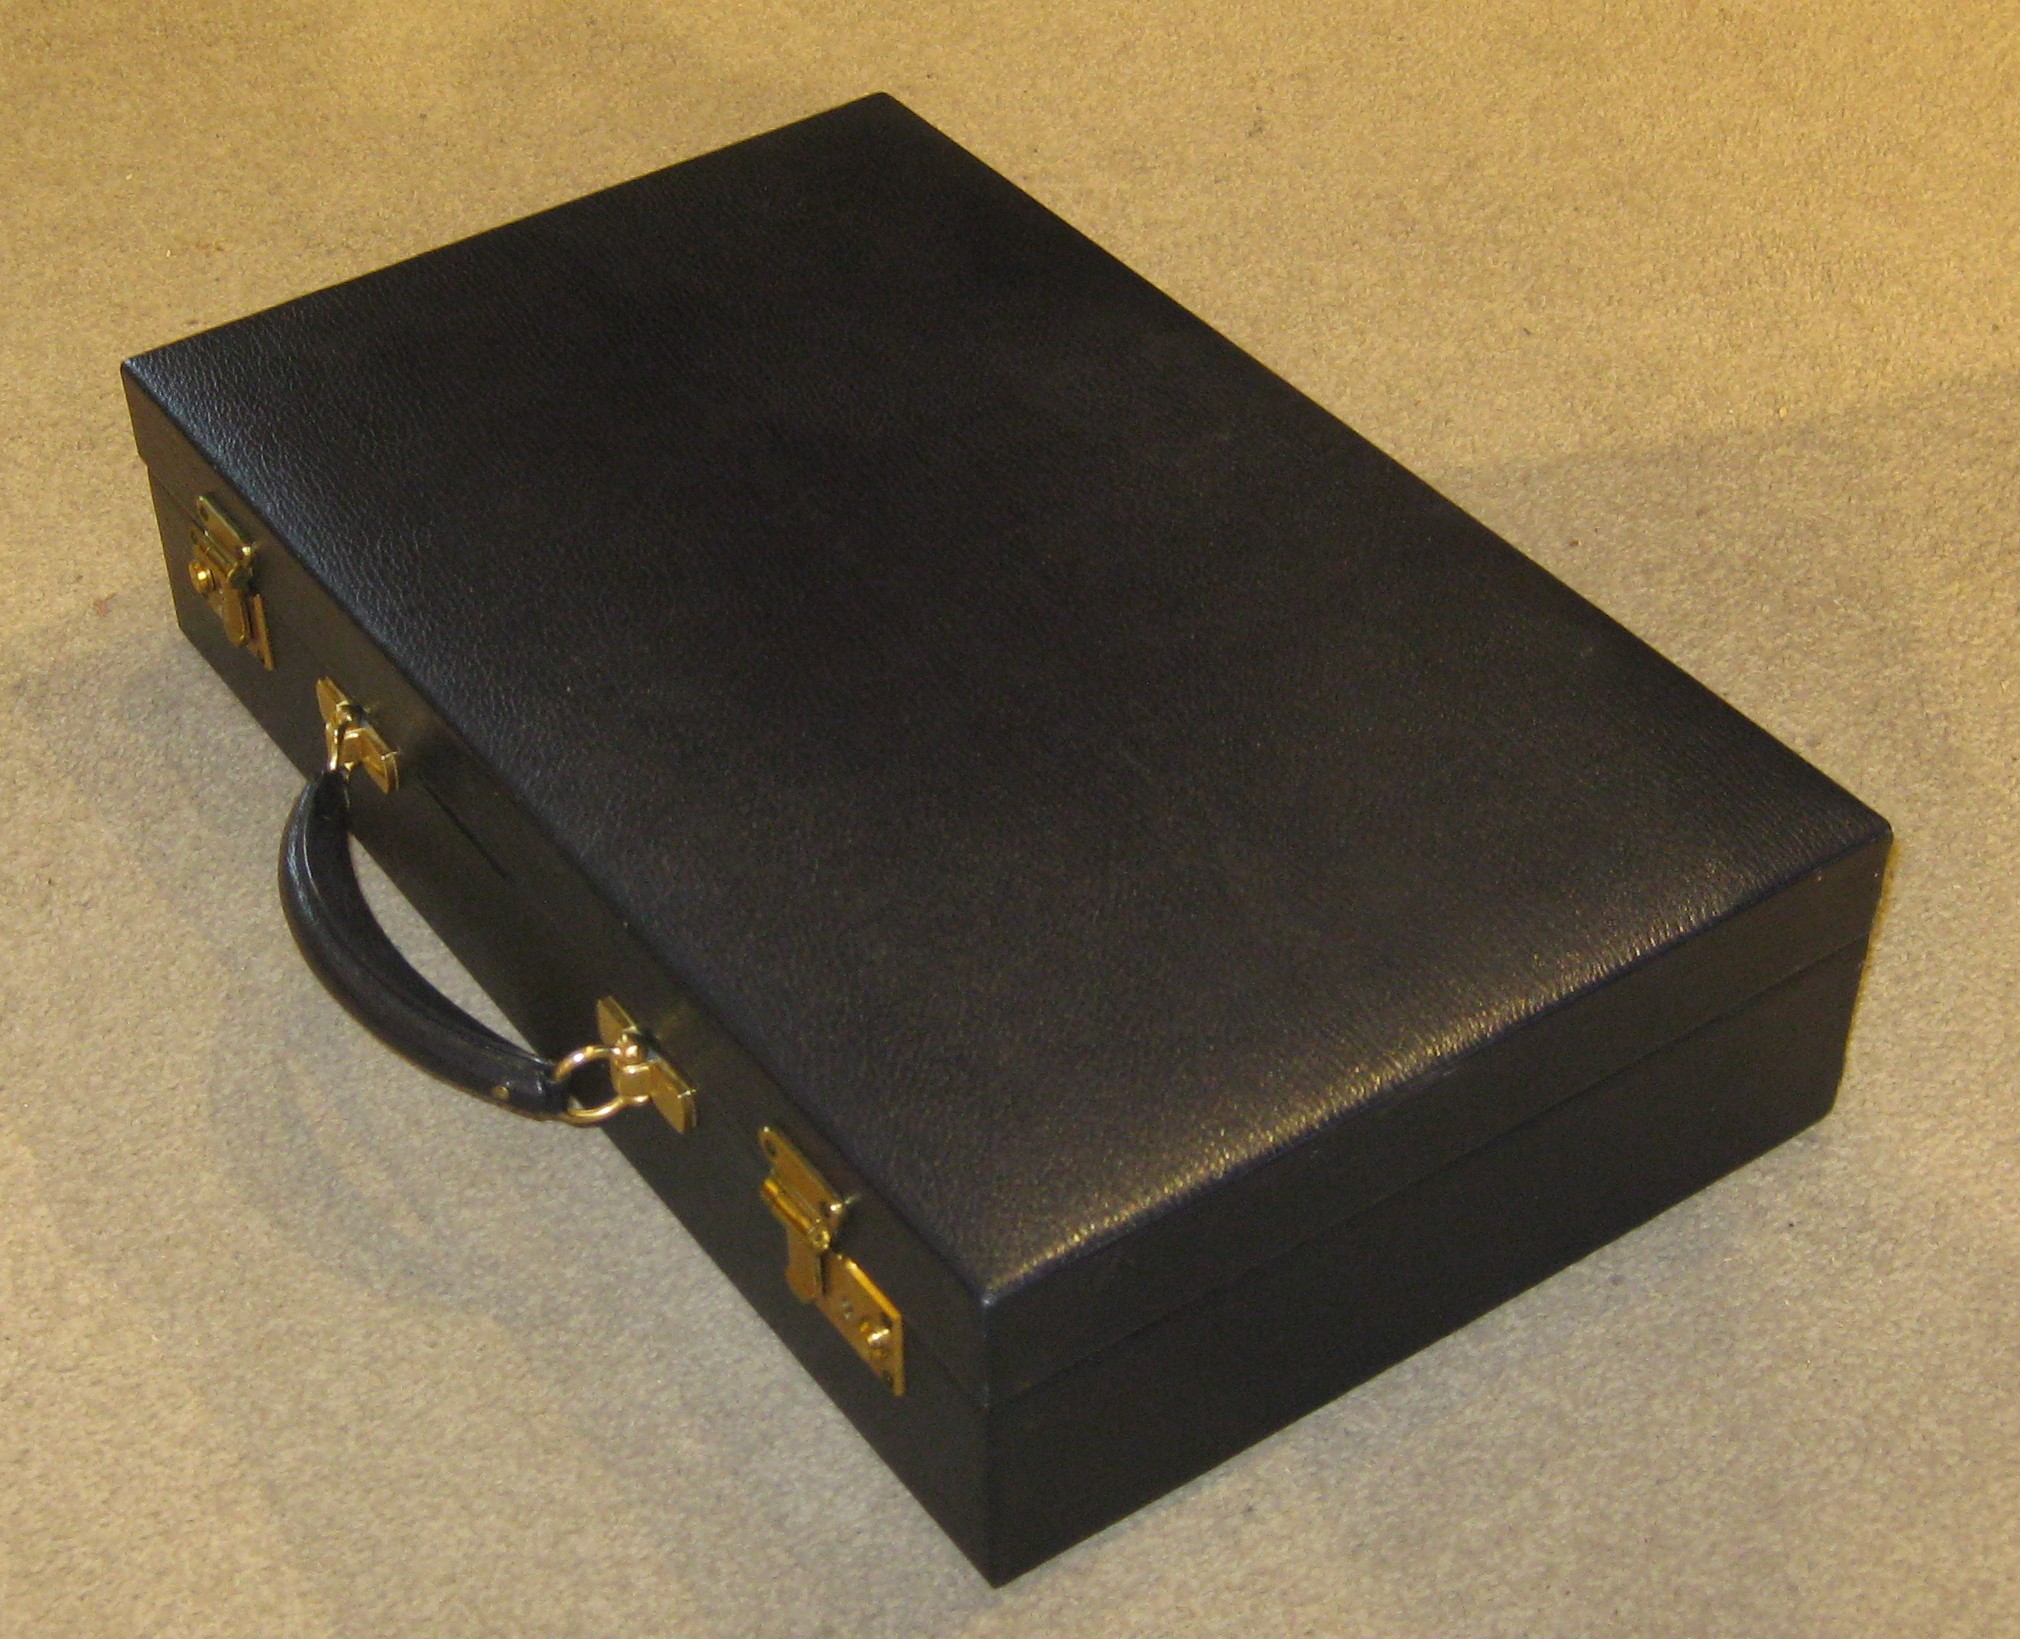 Superb quality leather attache/briefcase by Asprey, London. | Dorking Desks